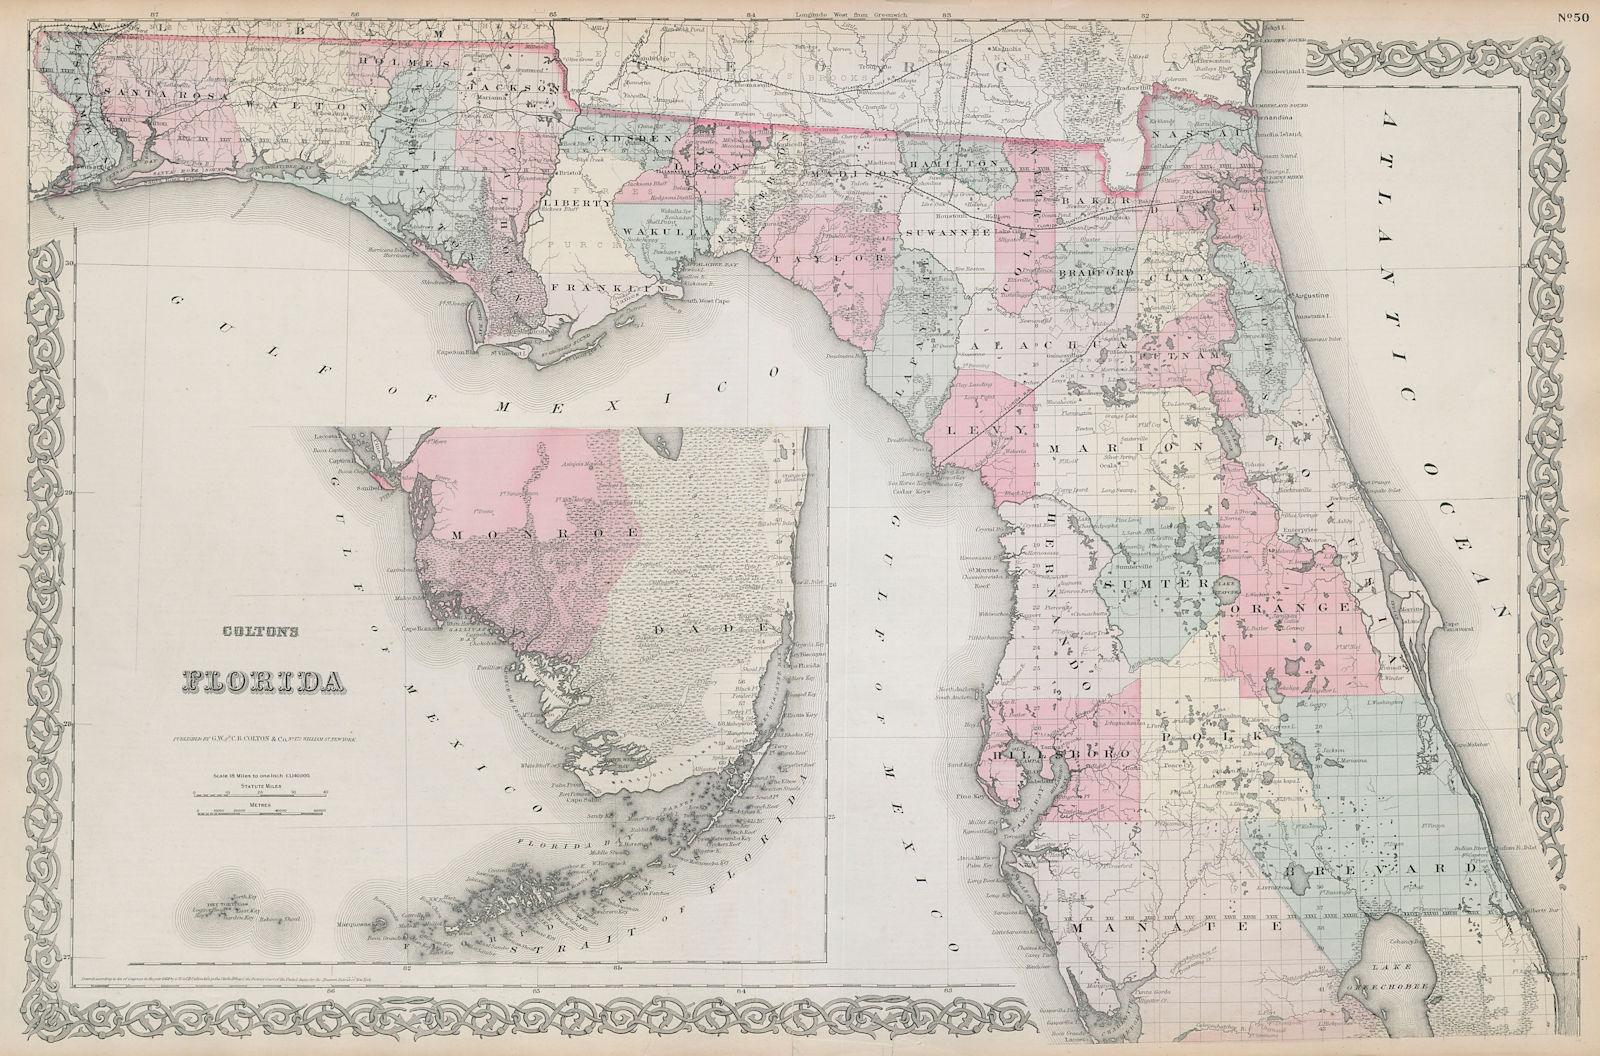 Associate Product Florida. Decorative antique US state map. Ft. Lauderdale Tampa. COLTON 1869